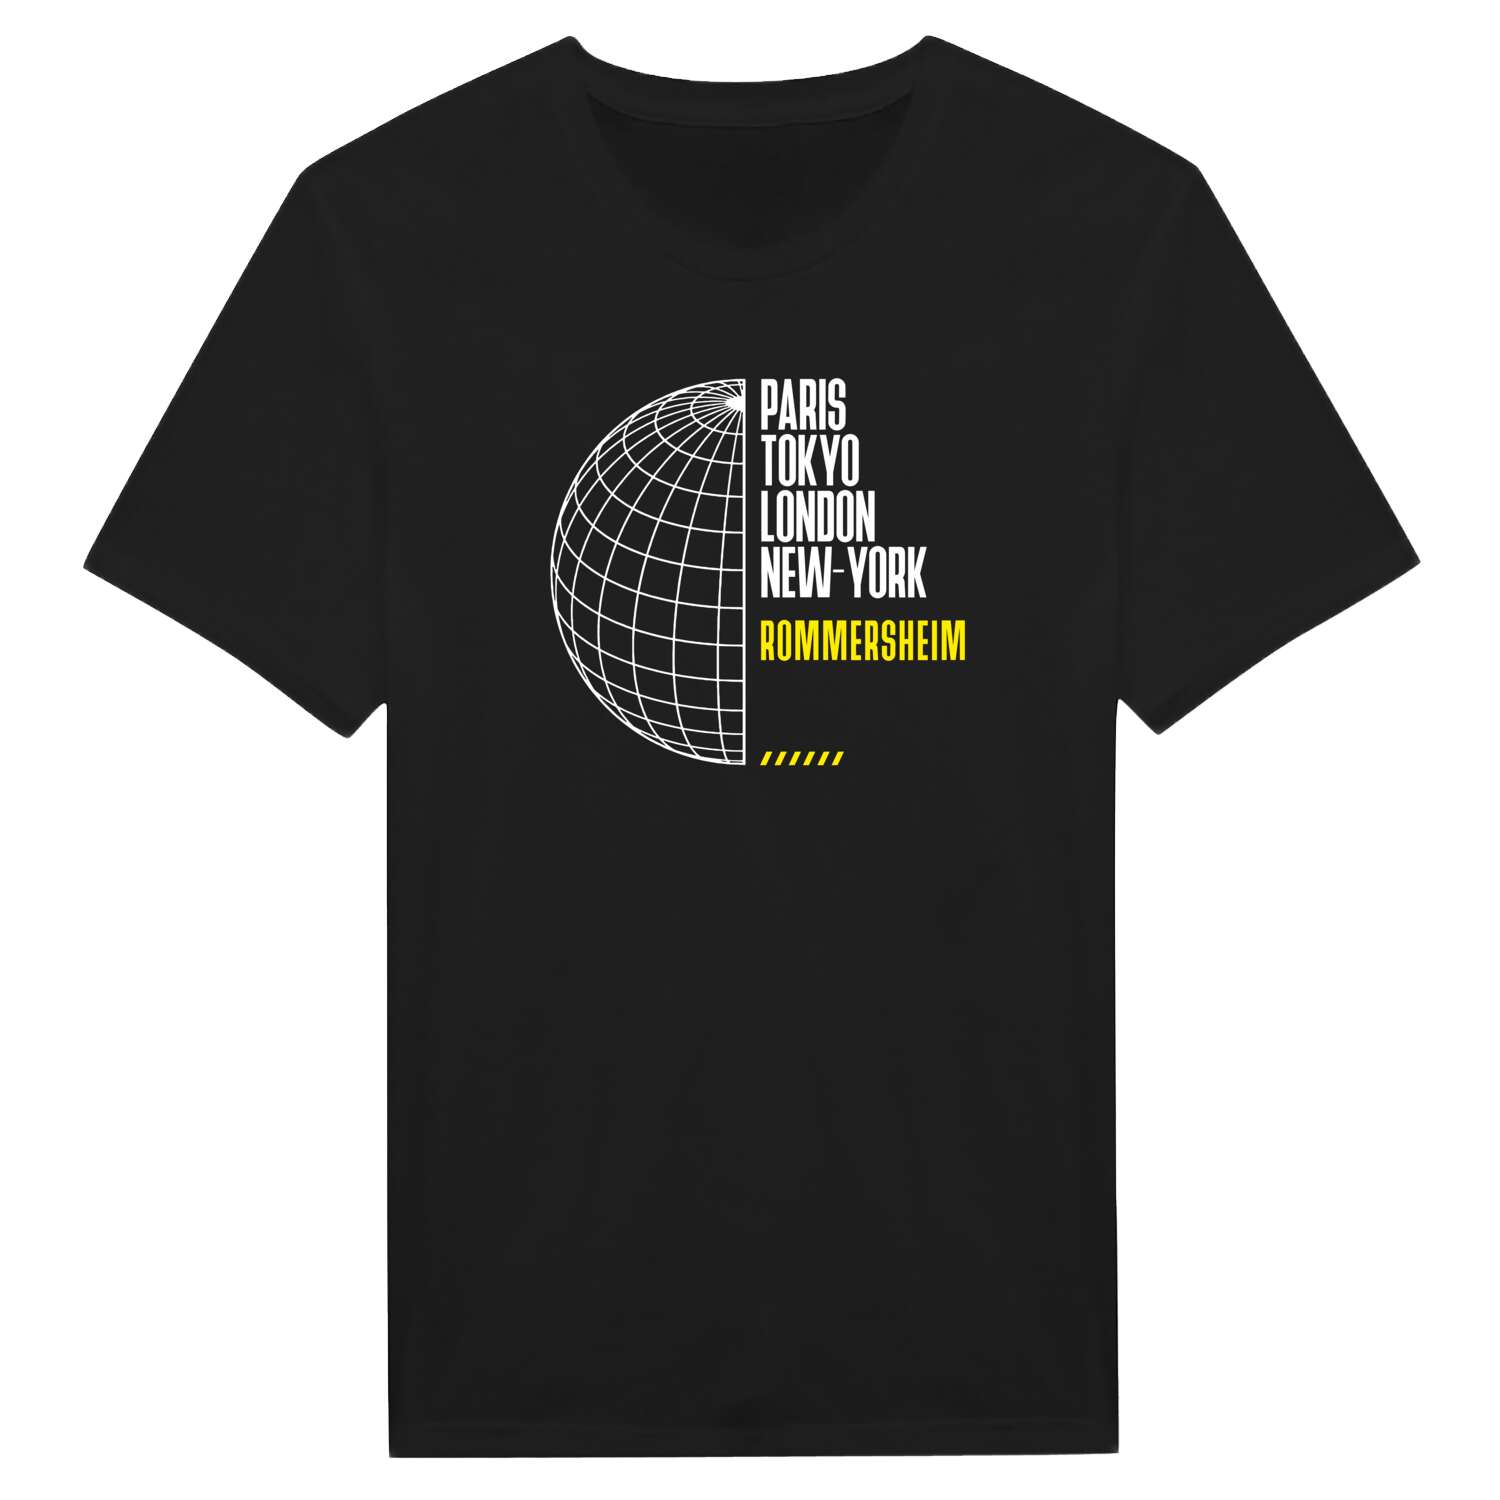 Rommersheim T-Shirt »Paris Tokyo London«